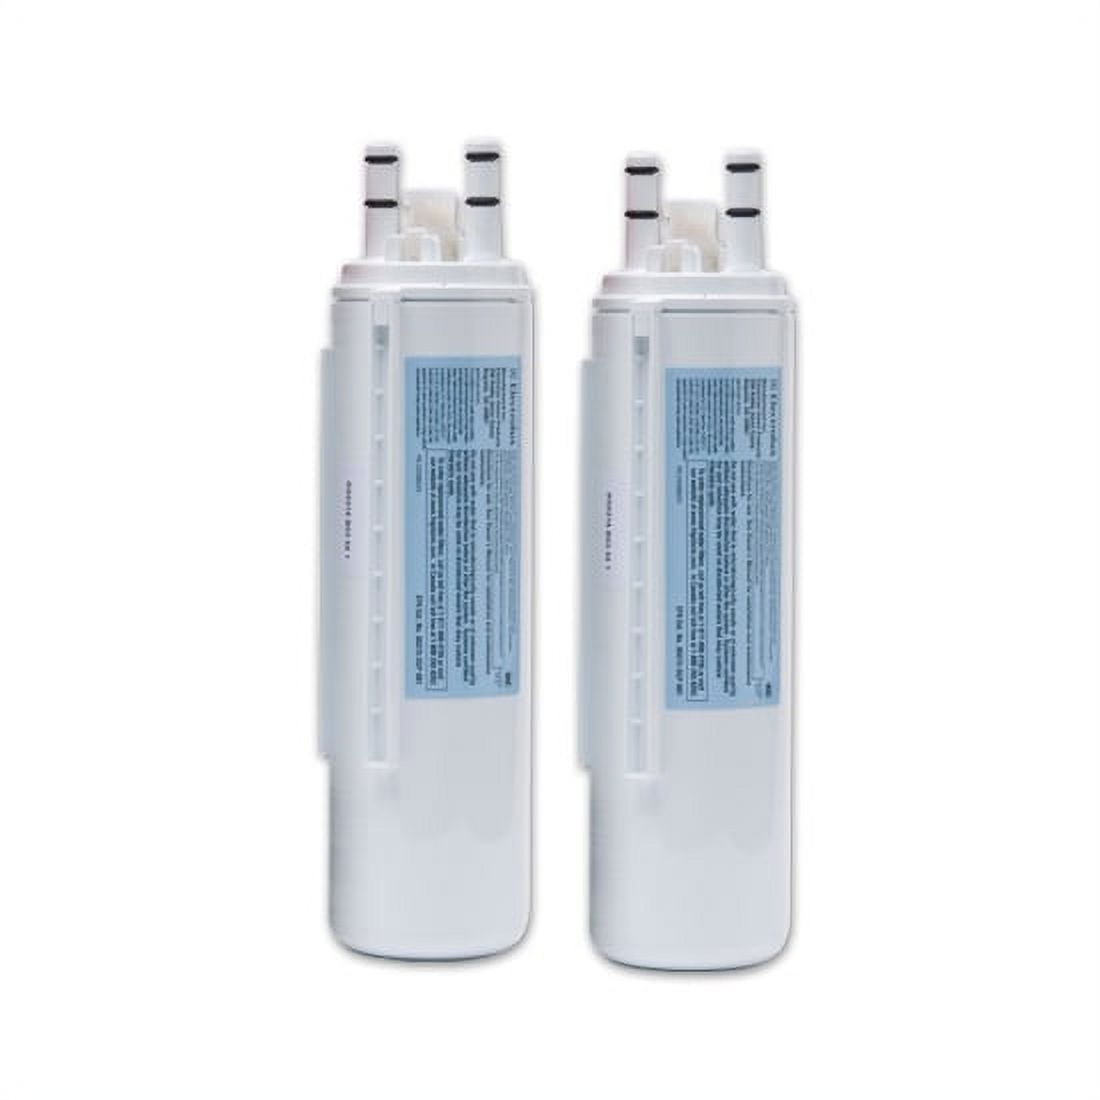 Frigidaire WF3CB PureSource3 Refrigerator Water Filter (2-Pack) 